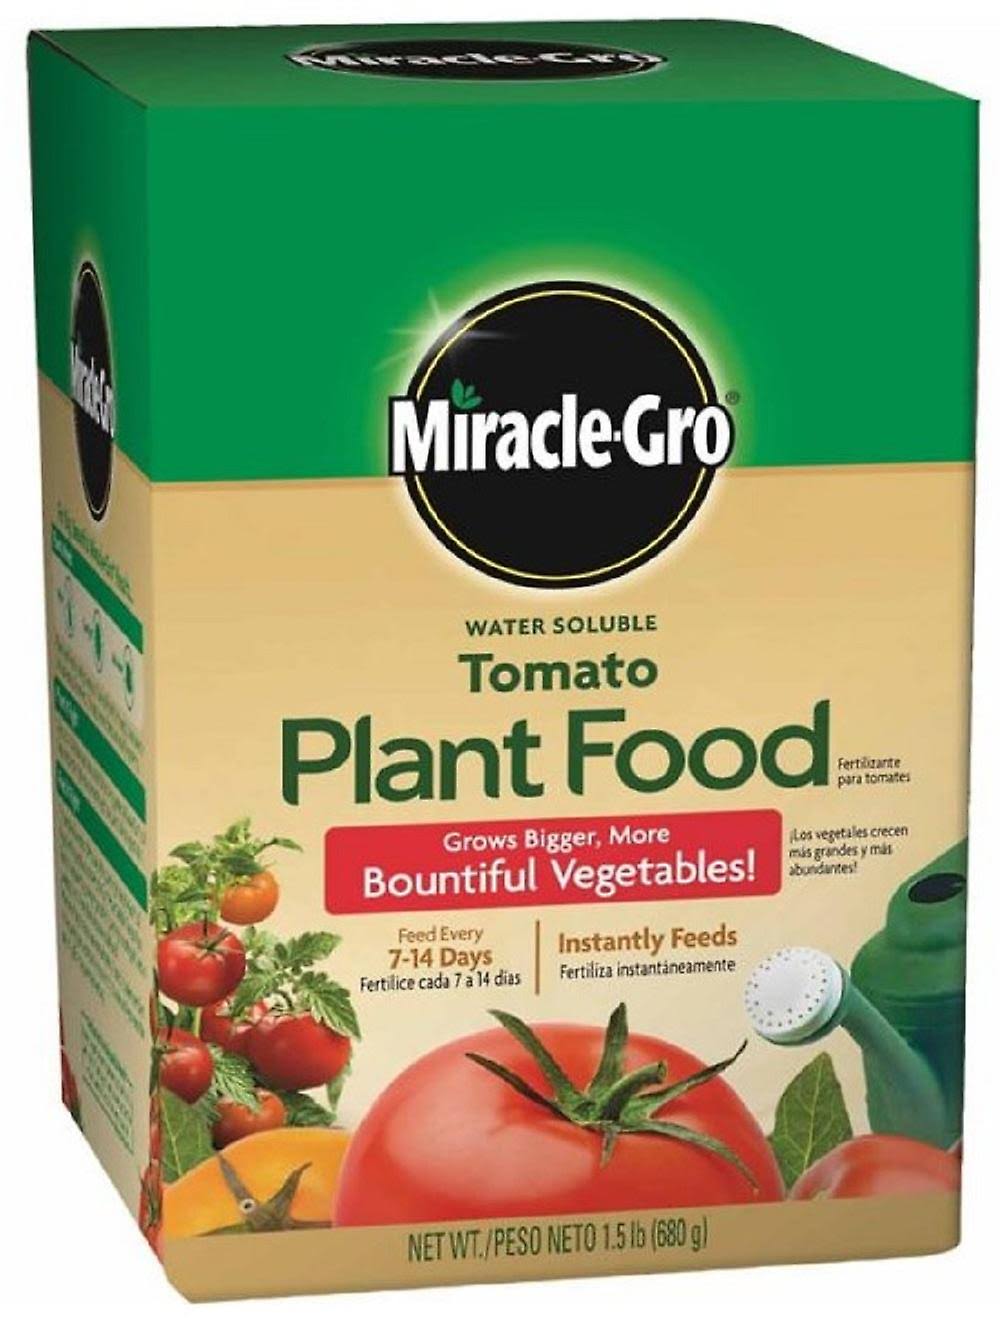 Miracle-Gro Tomato Plant Food - 1.5lb